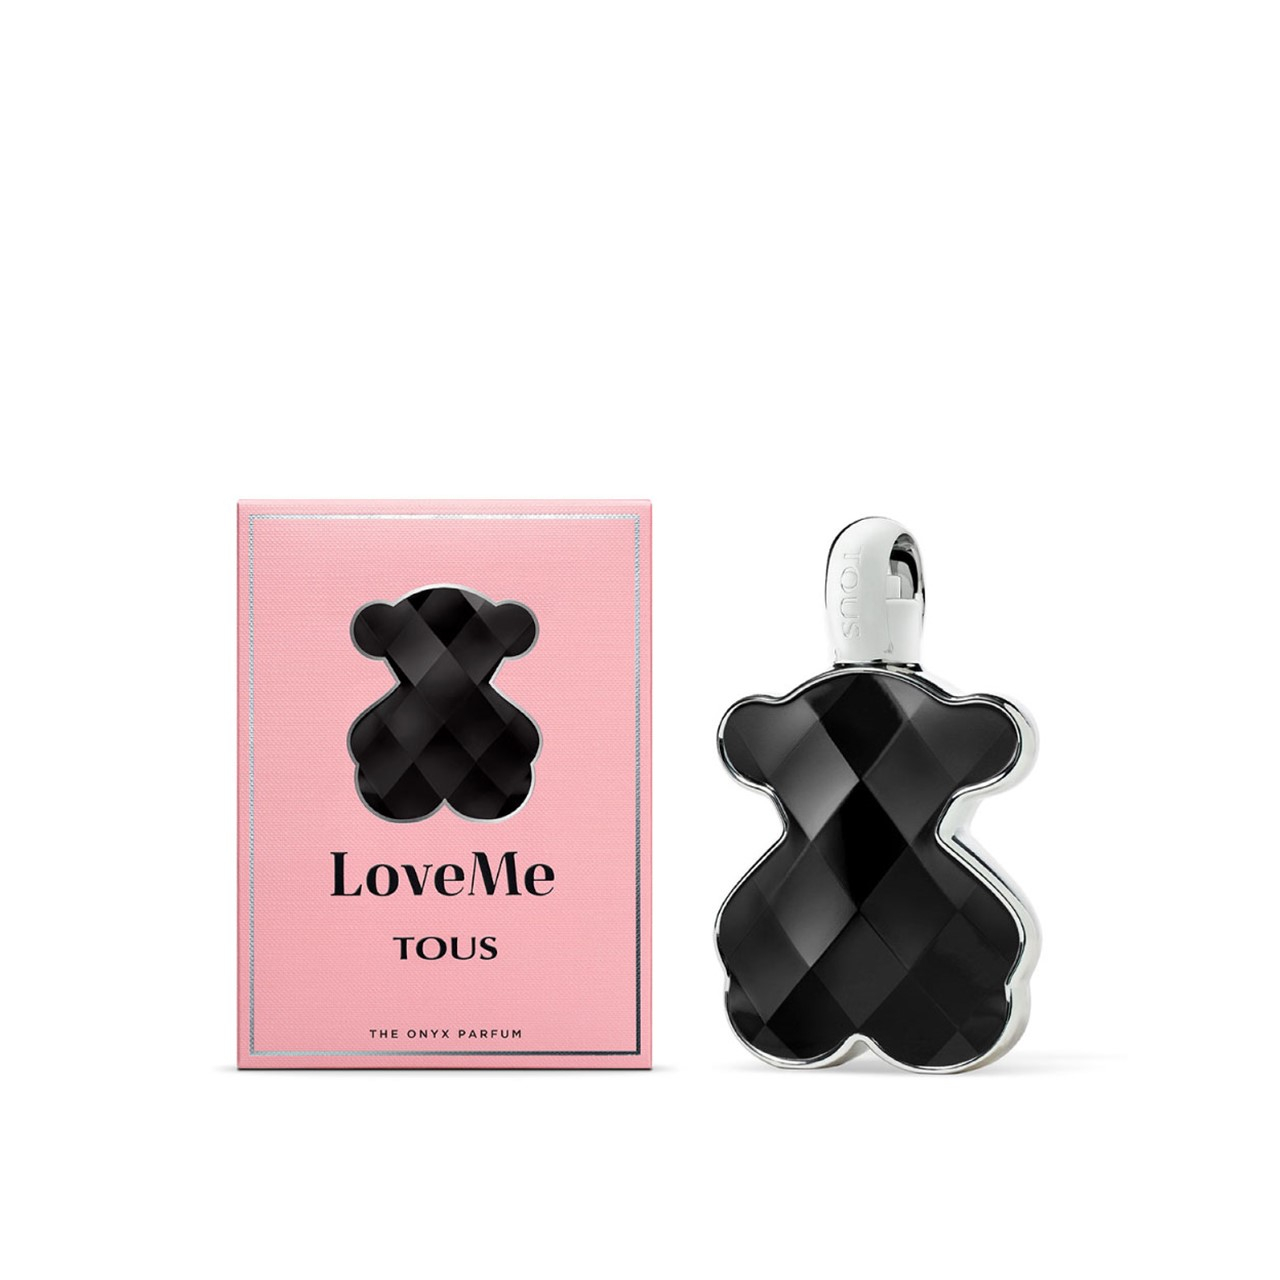 Tous LoveMe The Onyx Parfum 30ml (1.01fl oz)